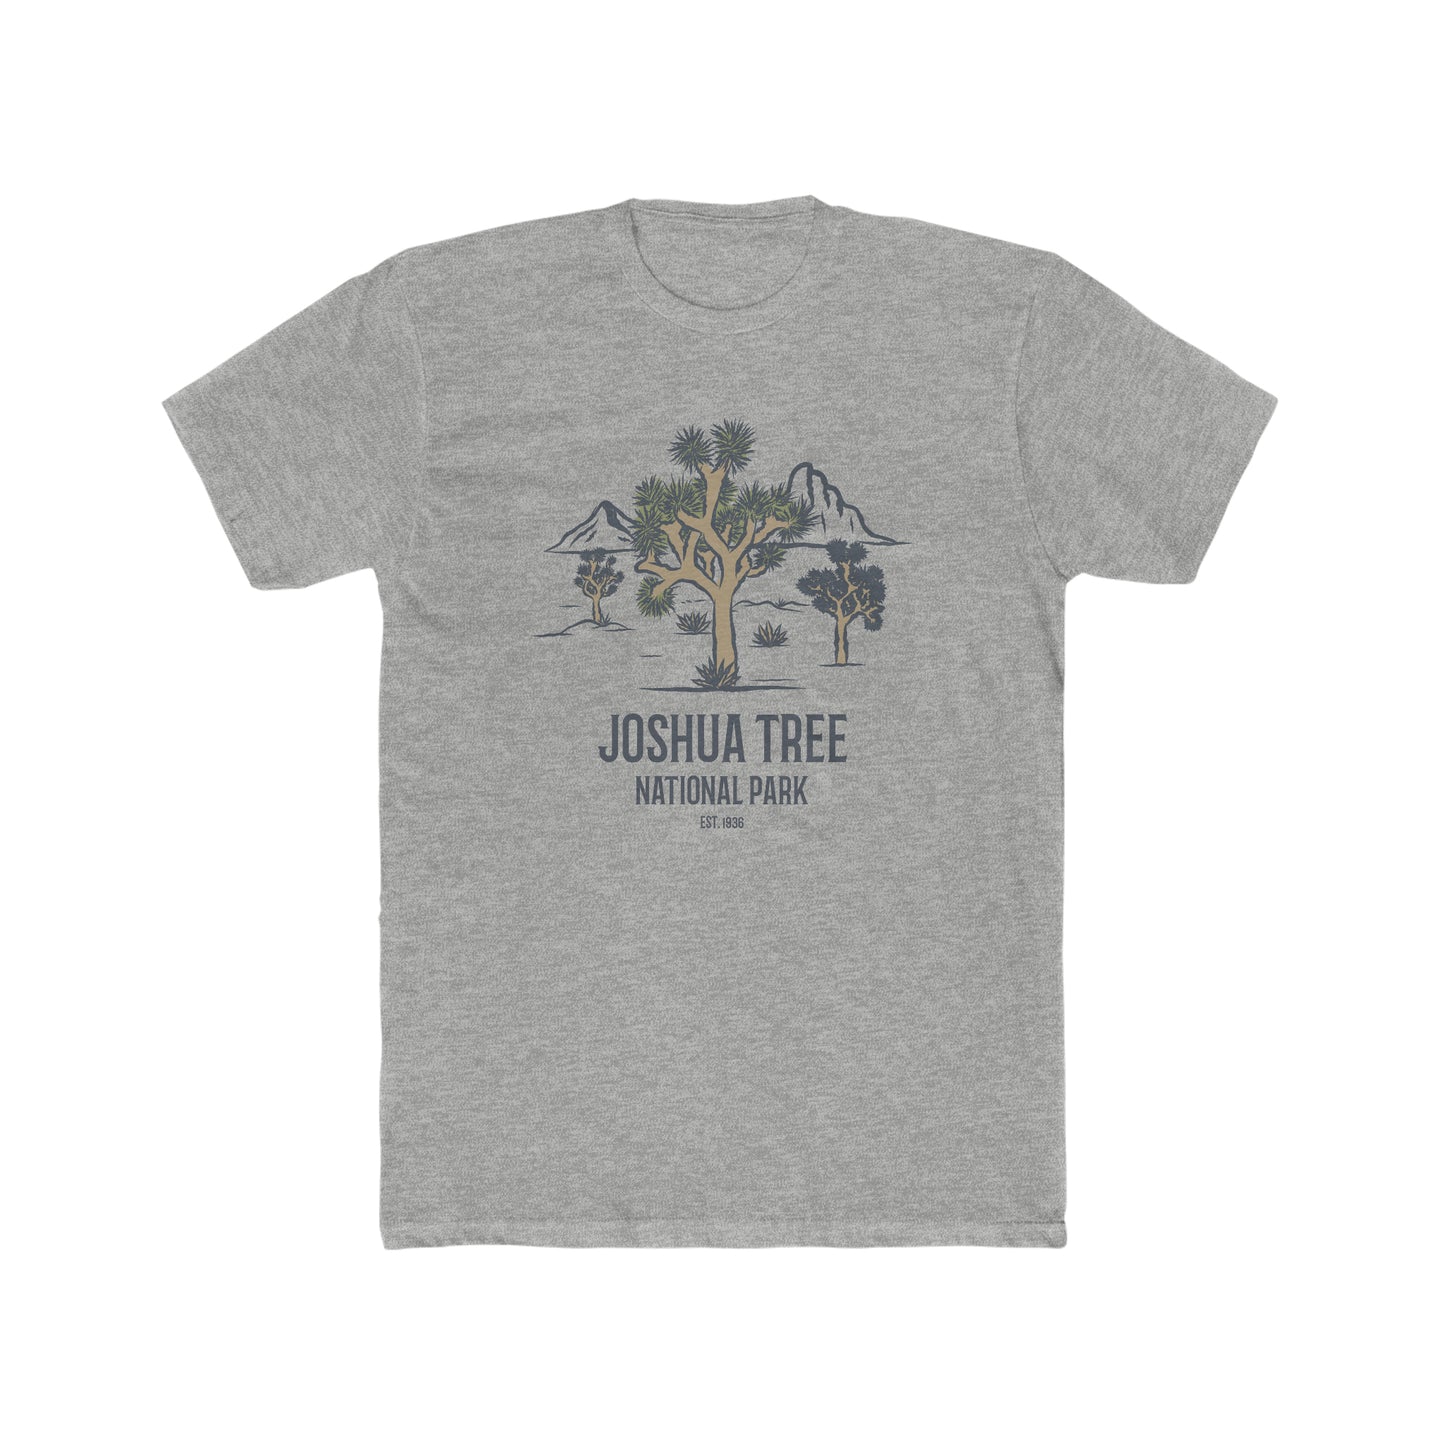 Joshua Tree National Park T-Shirt - Joshua Tree